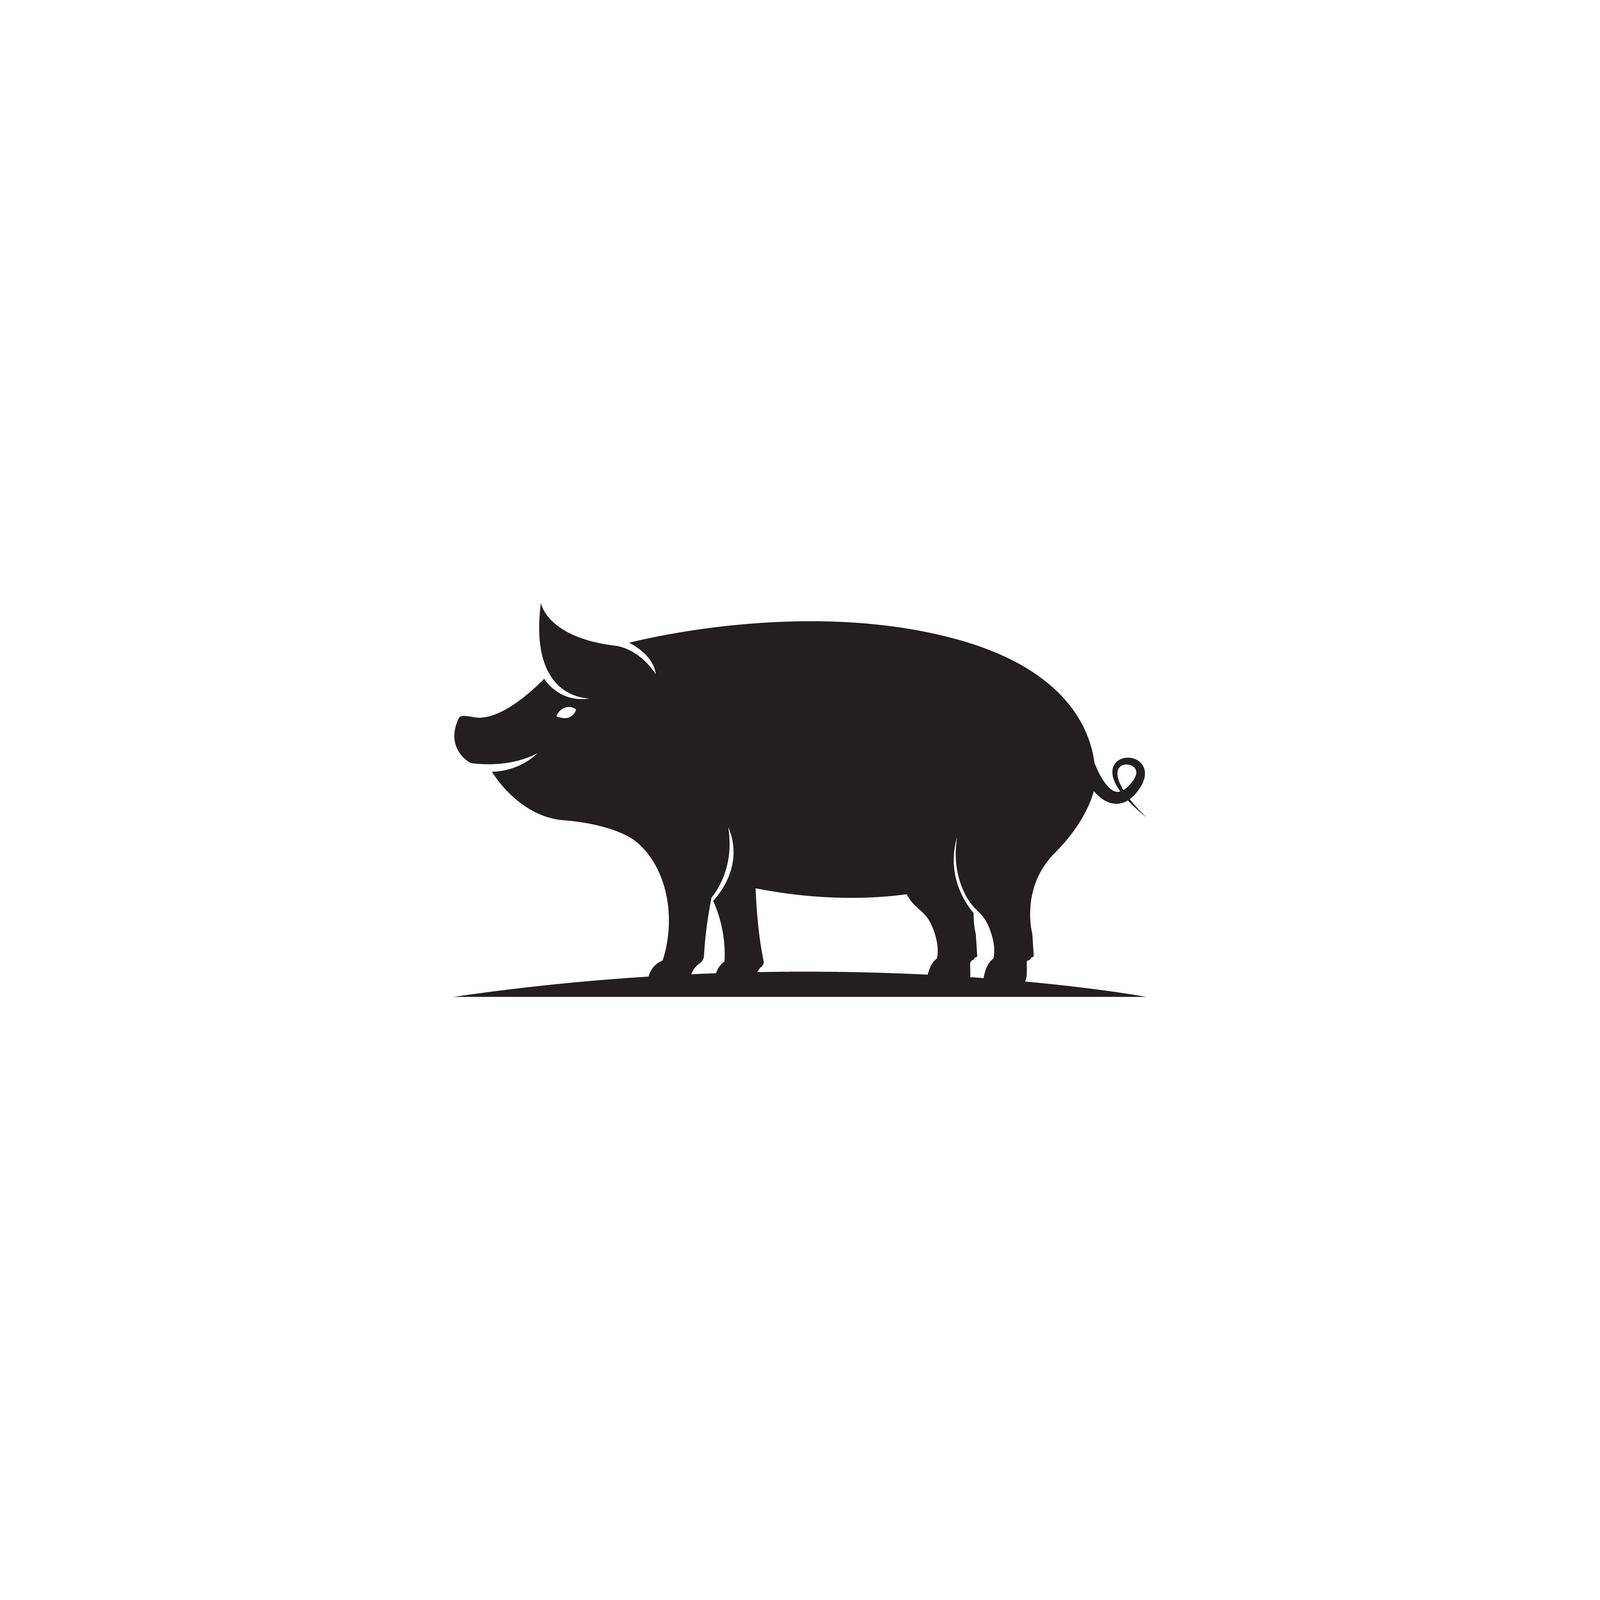 Pig icon vector design illustration template.